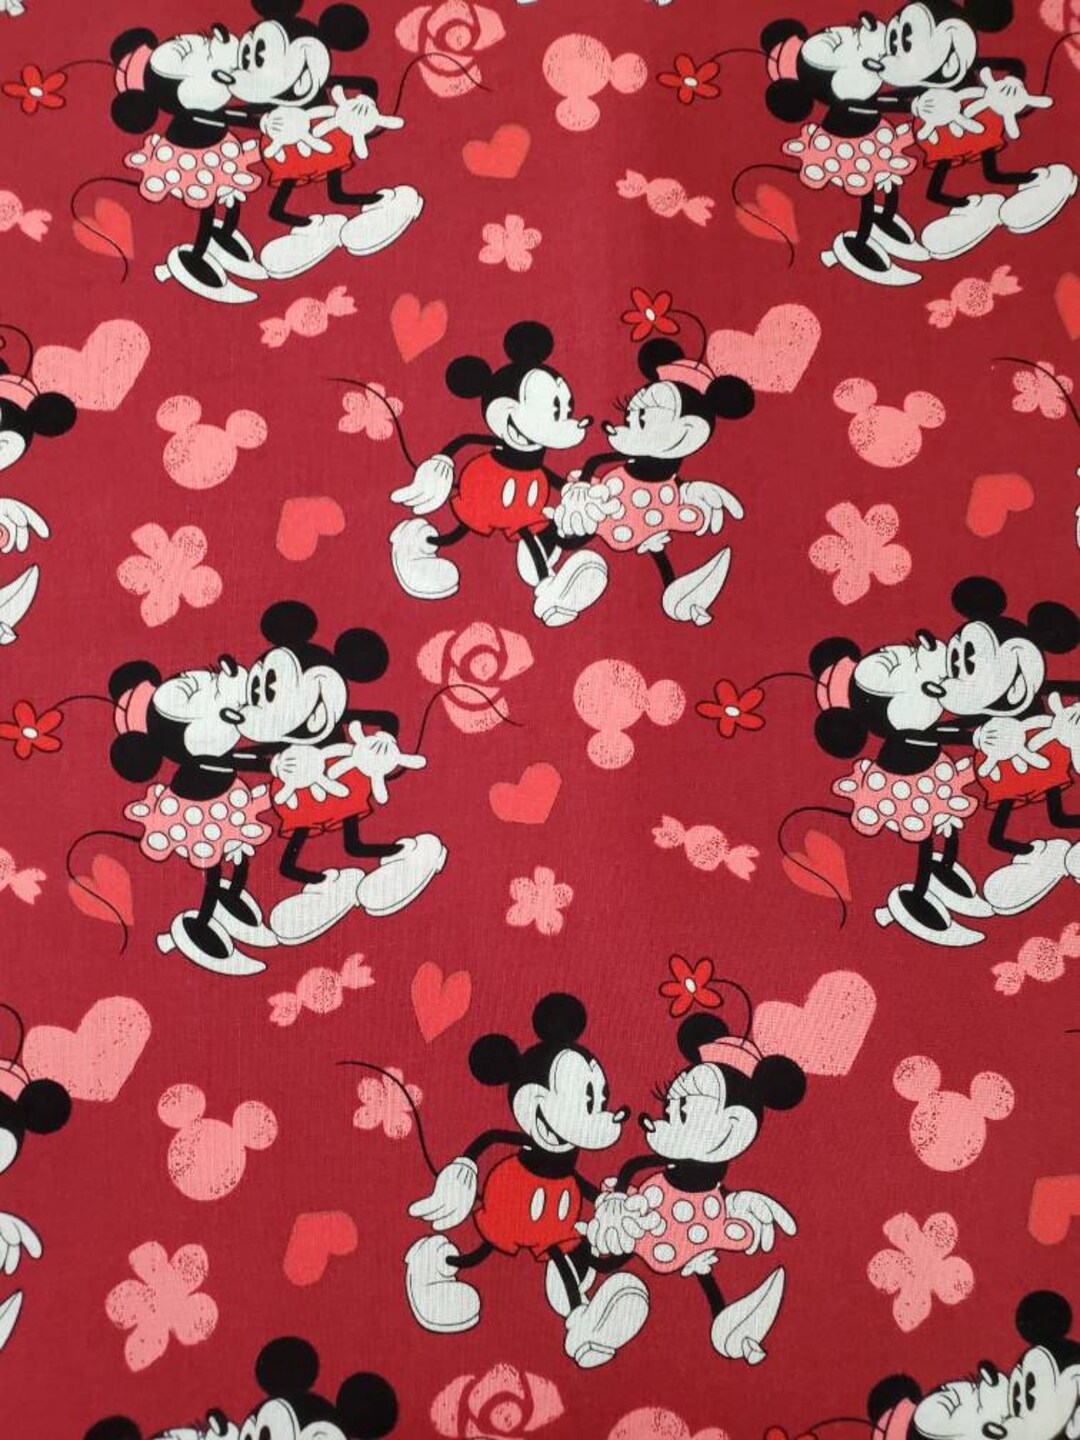 100+] Disney Valentine Wallpapers